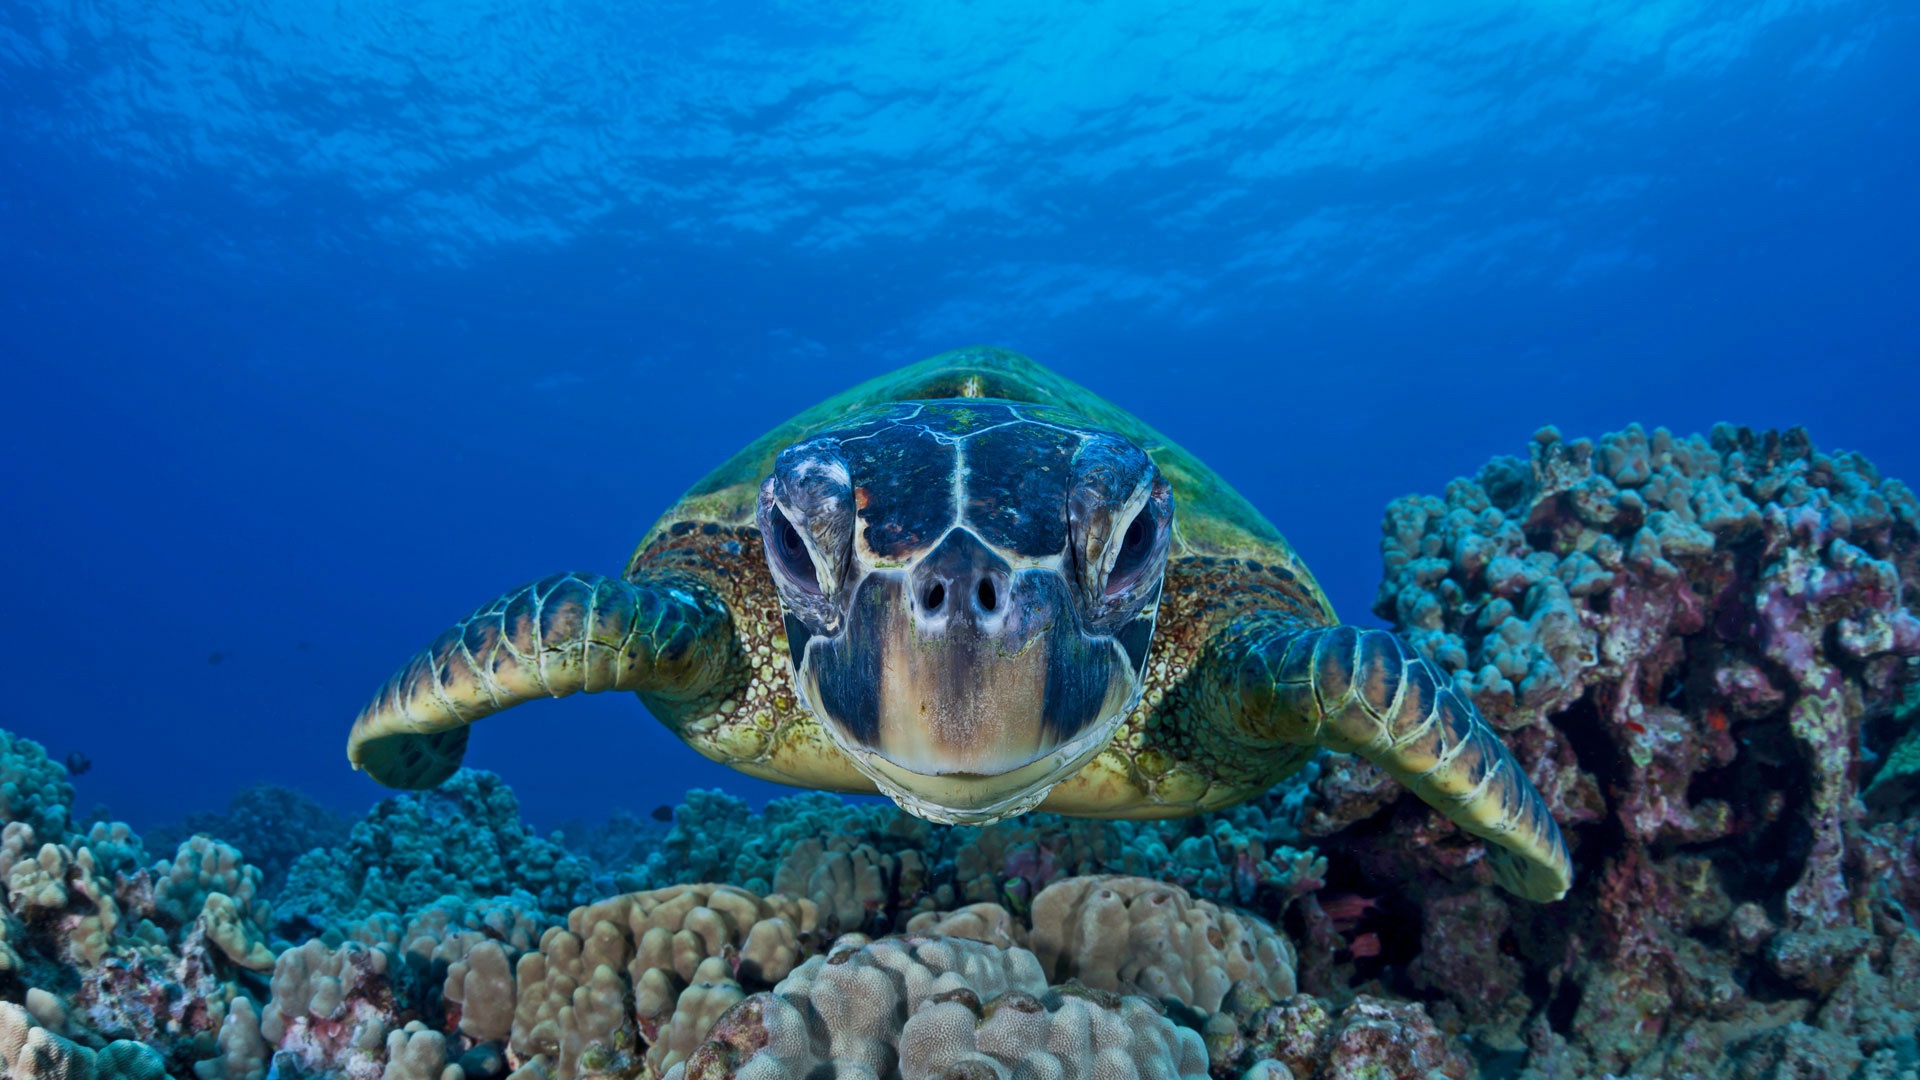 Coral Sea Life Turtle Underwater 1920x1080